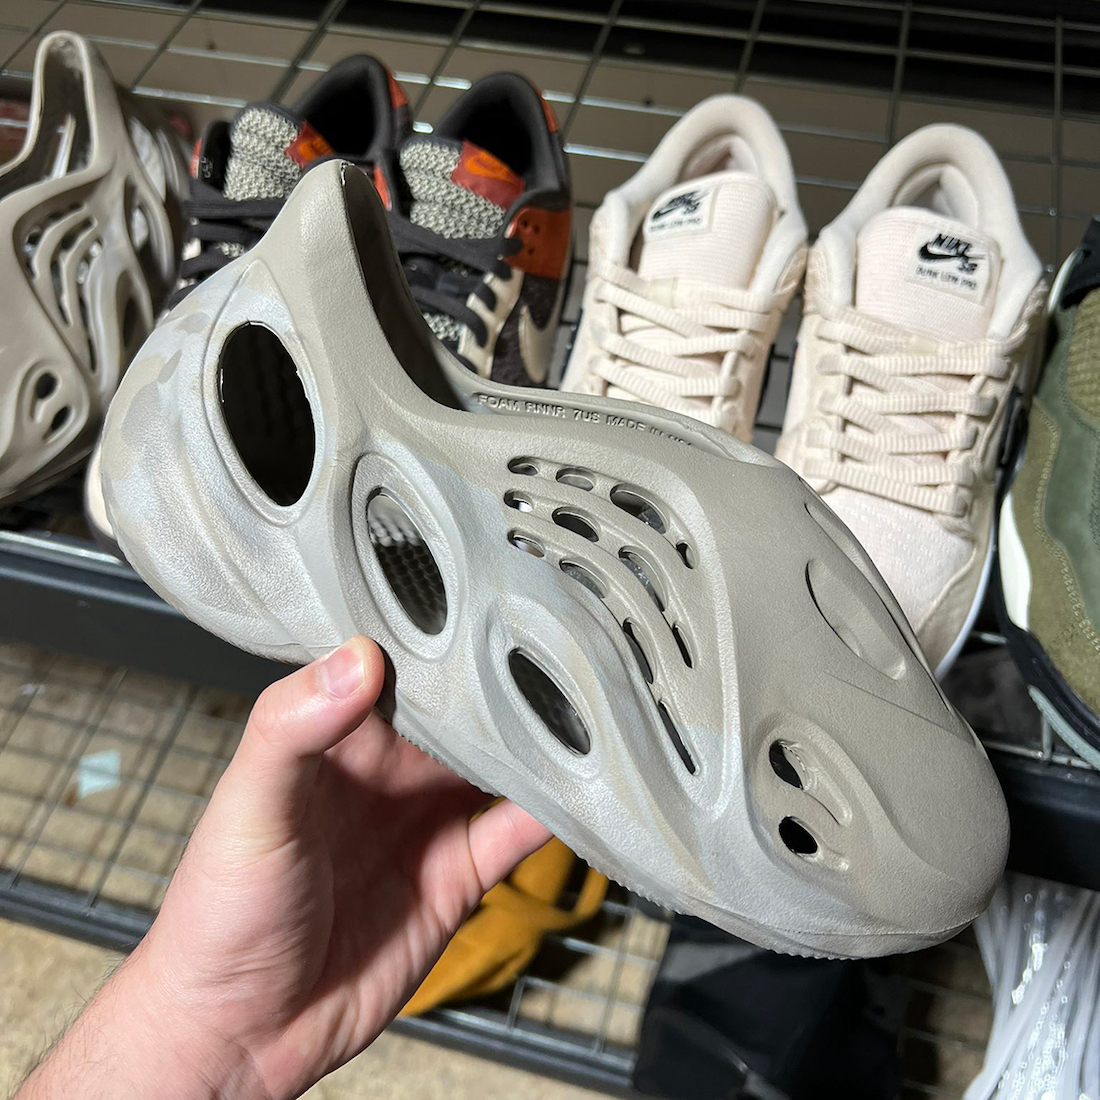 An Unreleased adidas Yeezy Foam Runner Surfaces in Greyscale ...